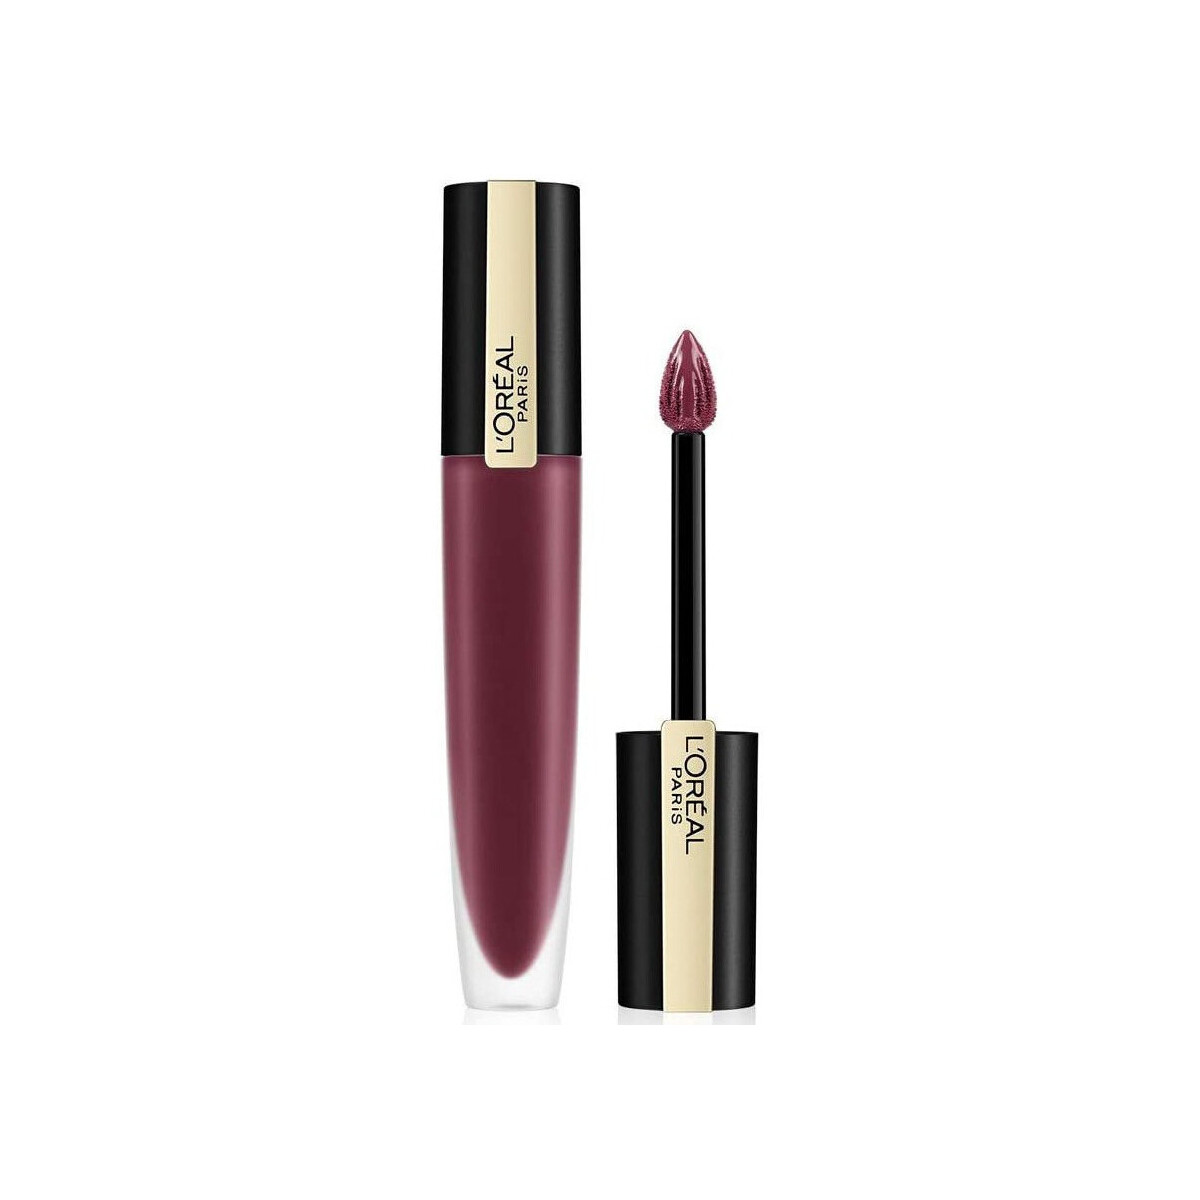 Beauty Damen Lippenstift L'oréal Signature Matte Liquid Lipstick Violett